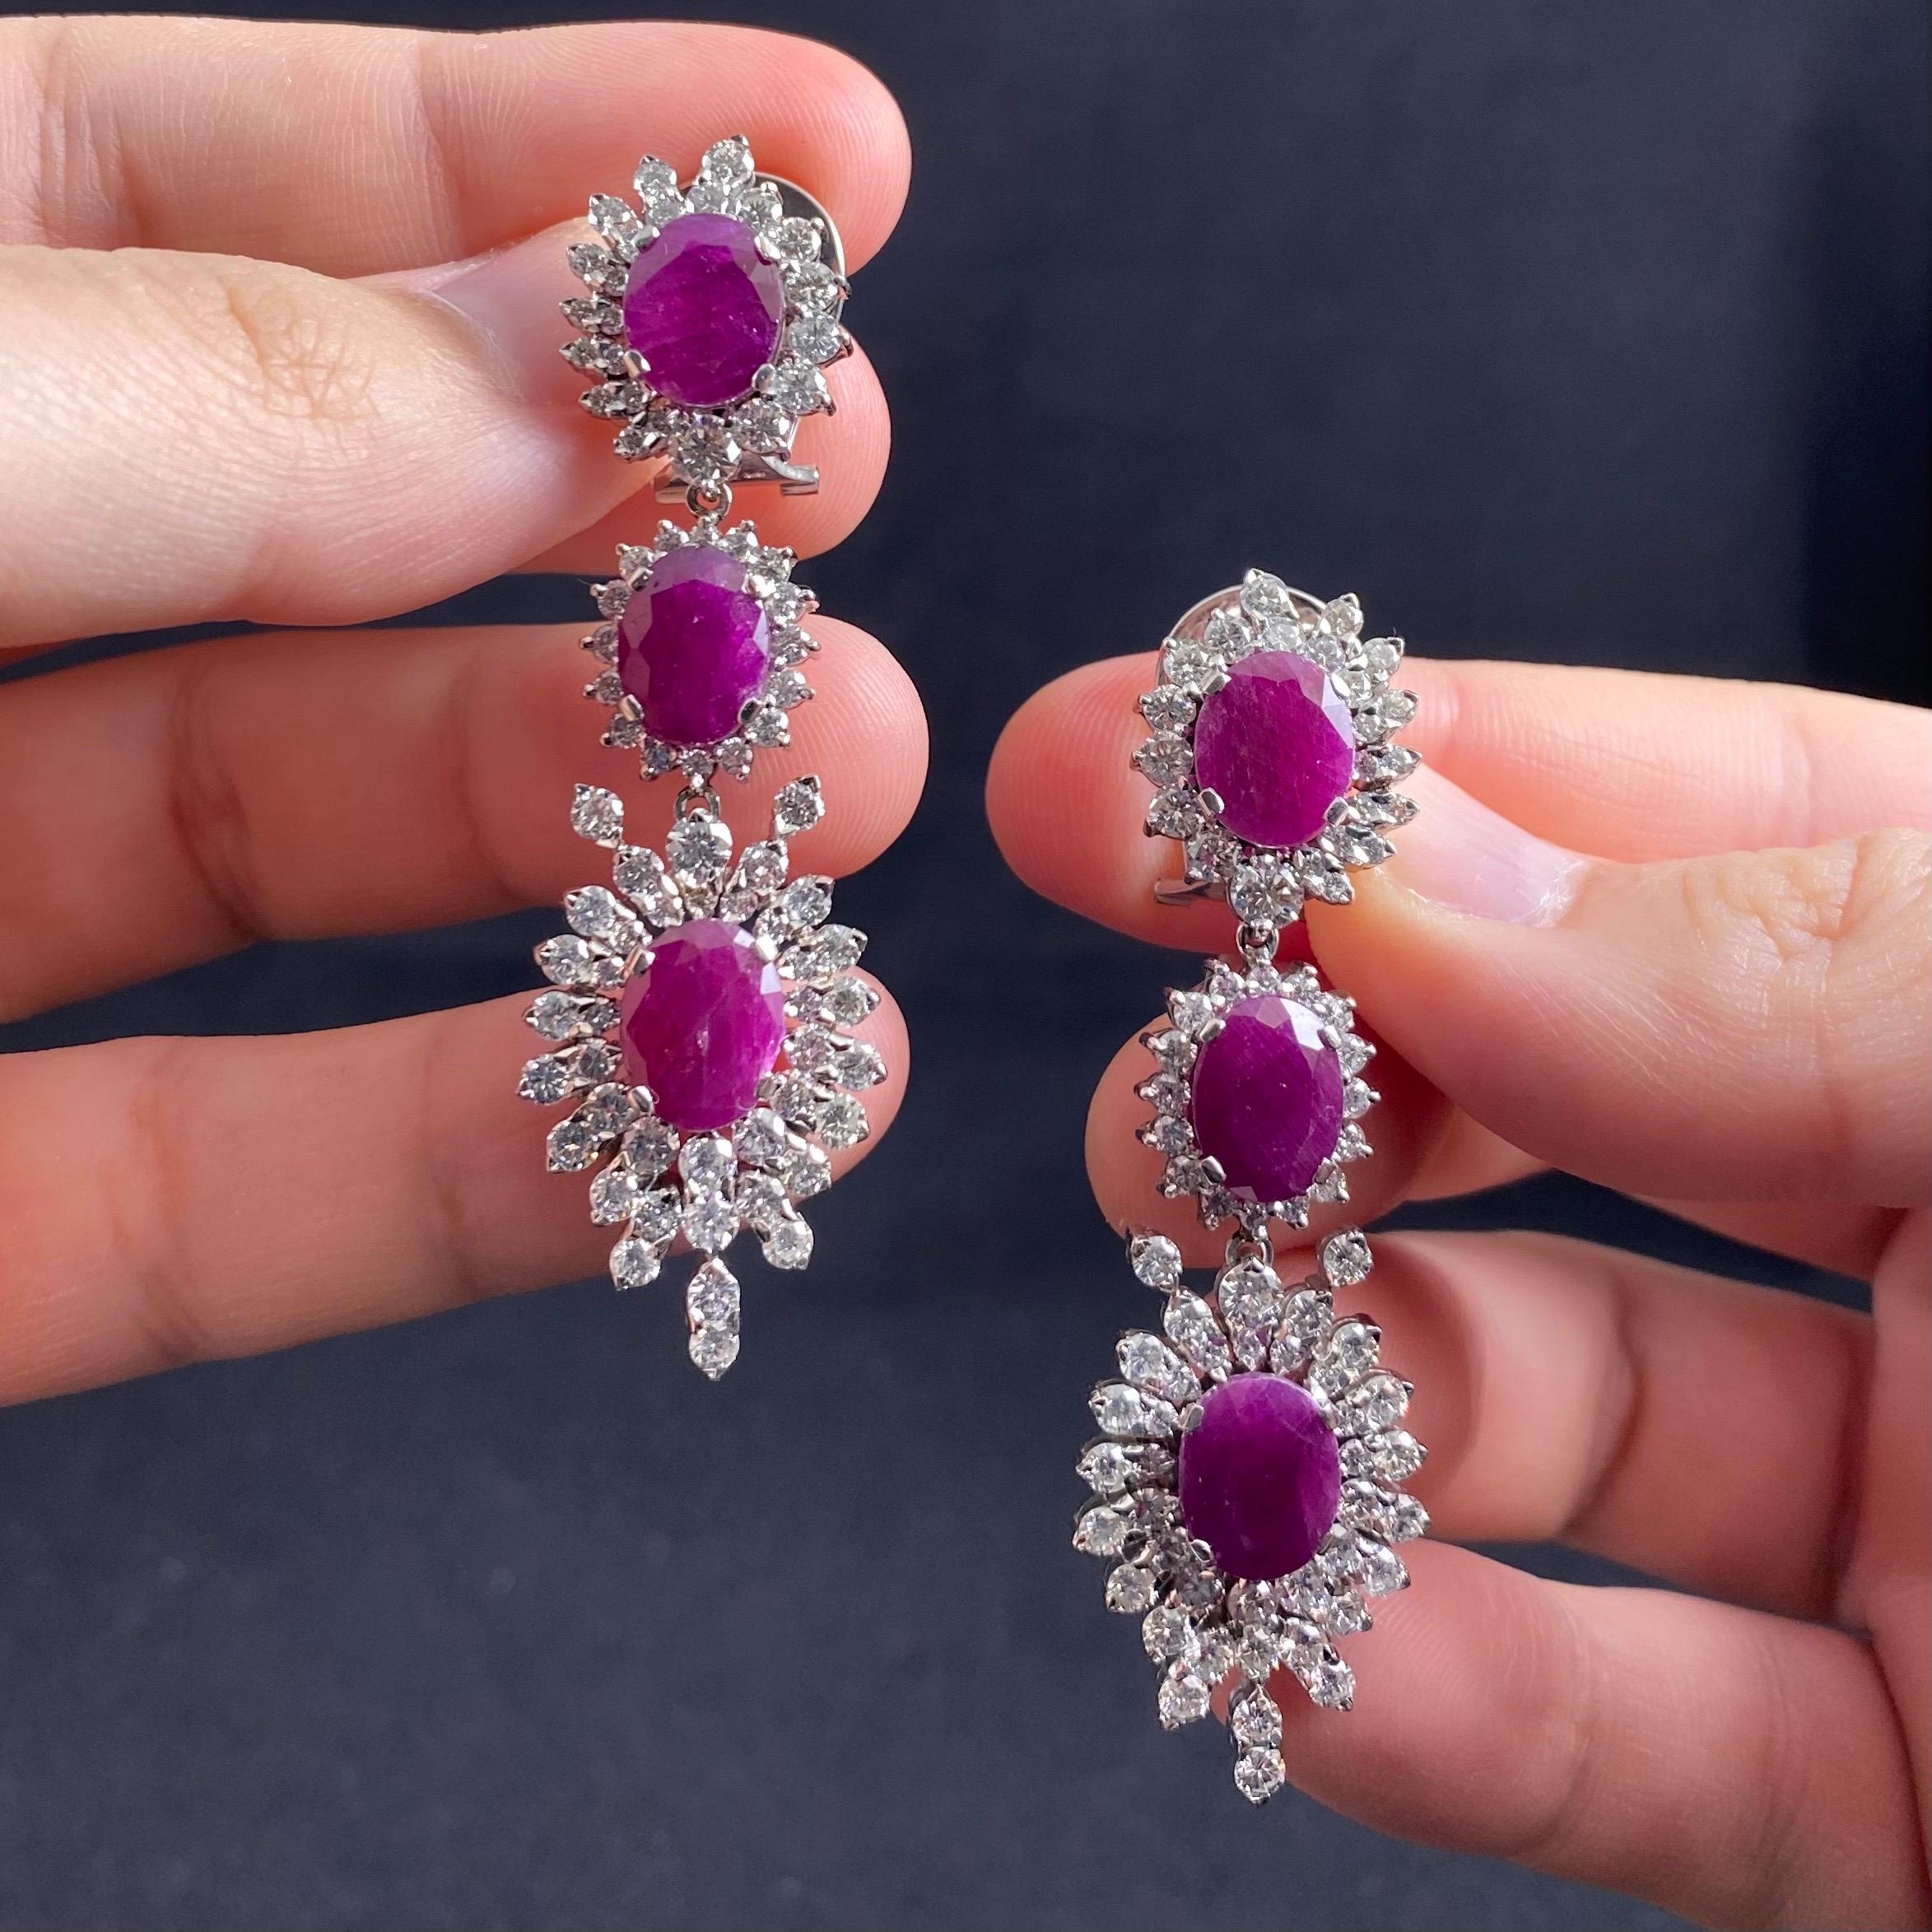 8ct diamond earrings